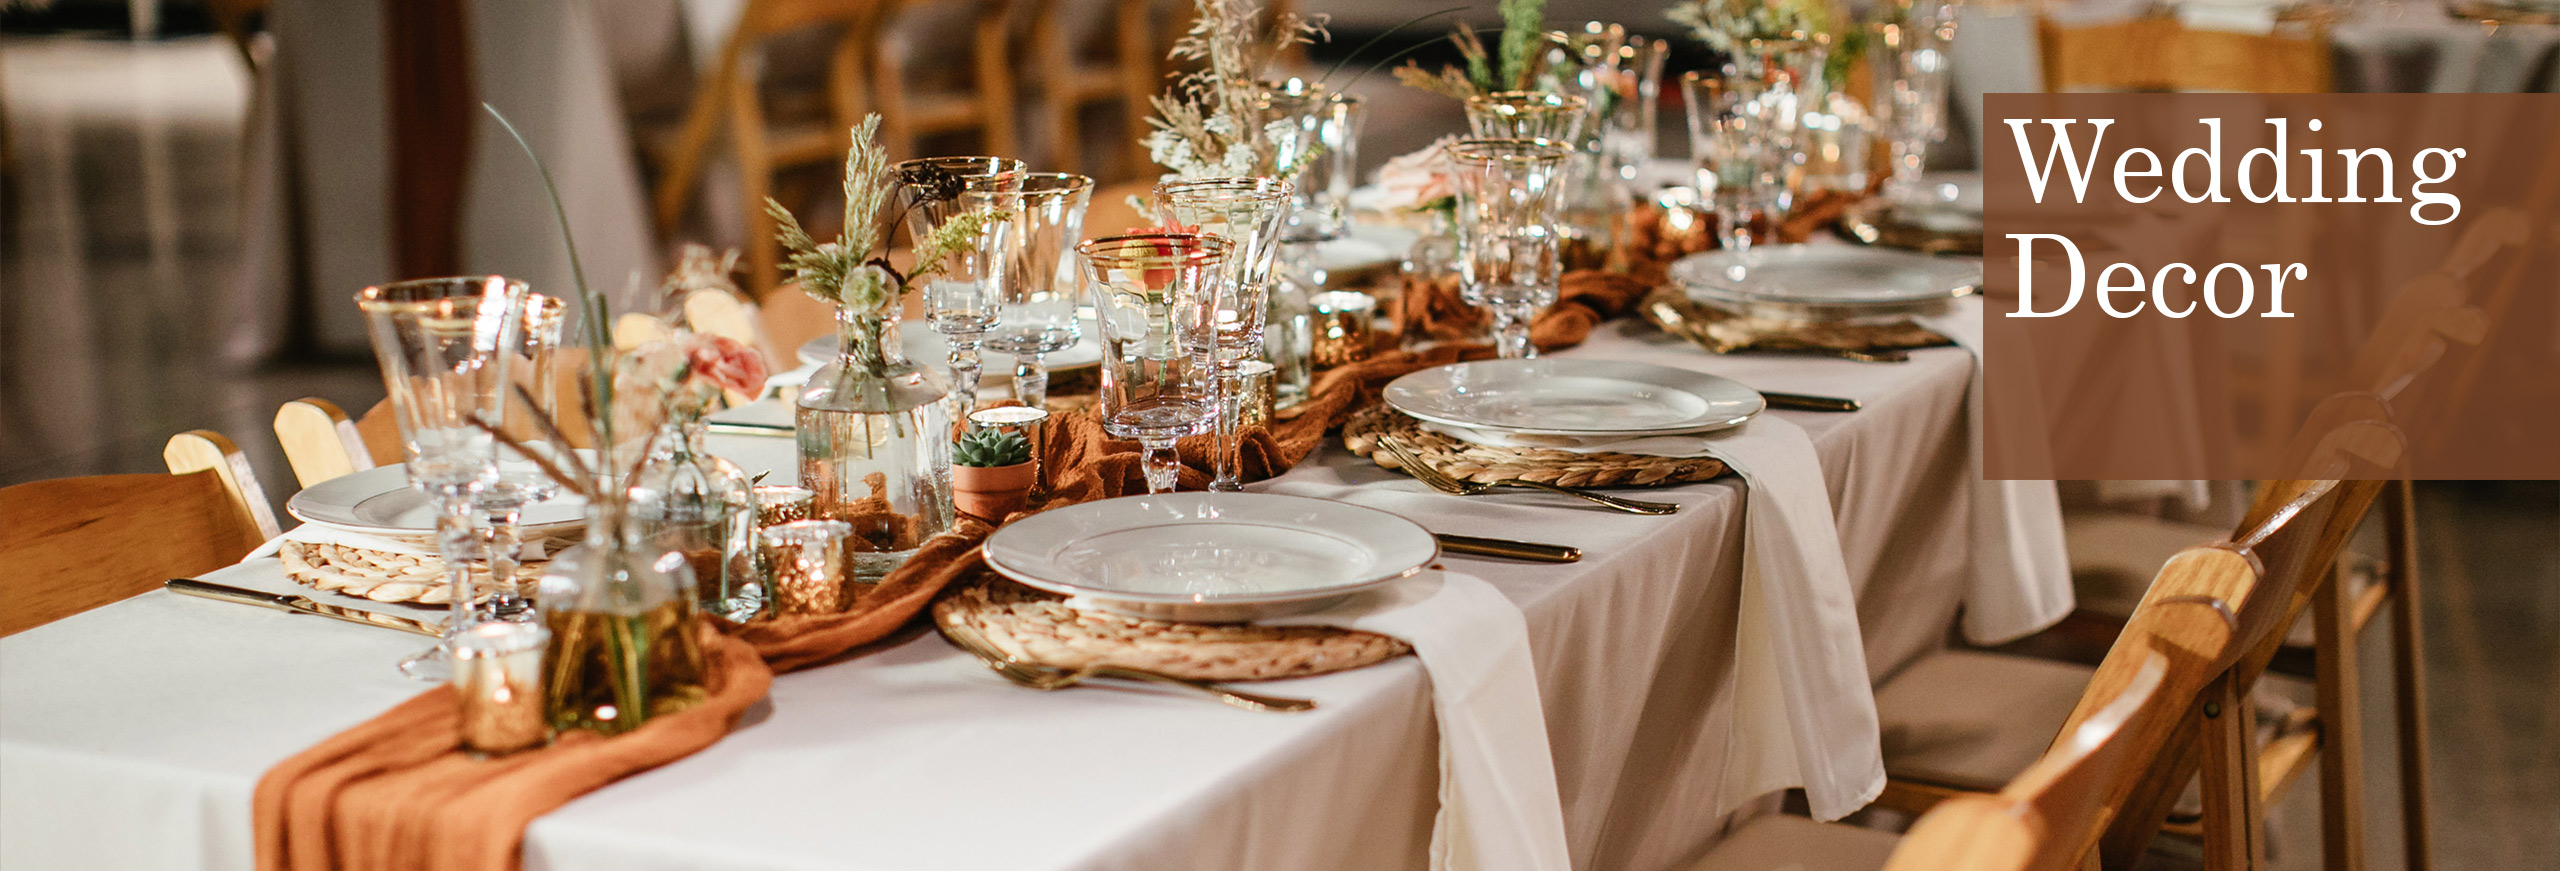 wedding decor table setting